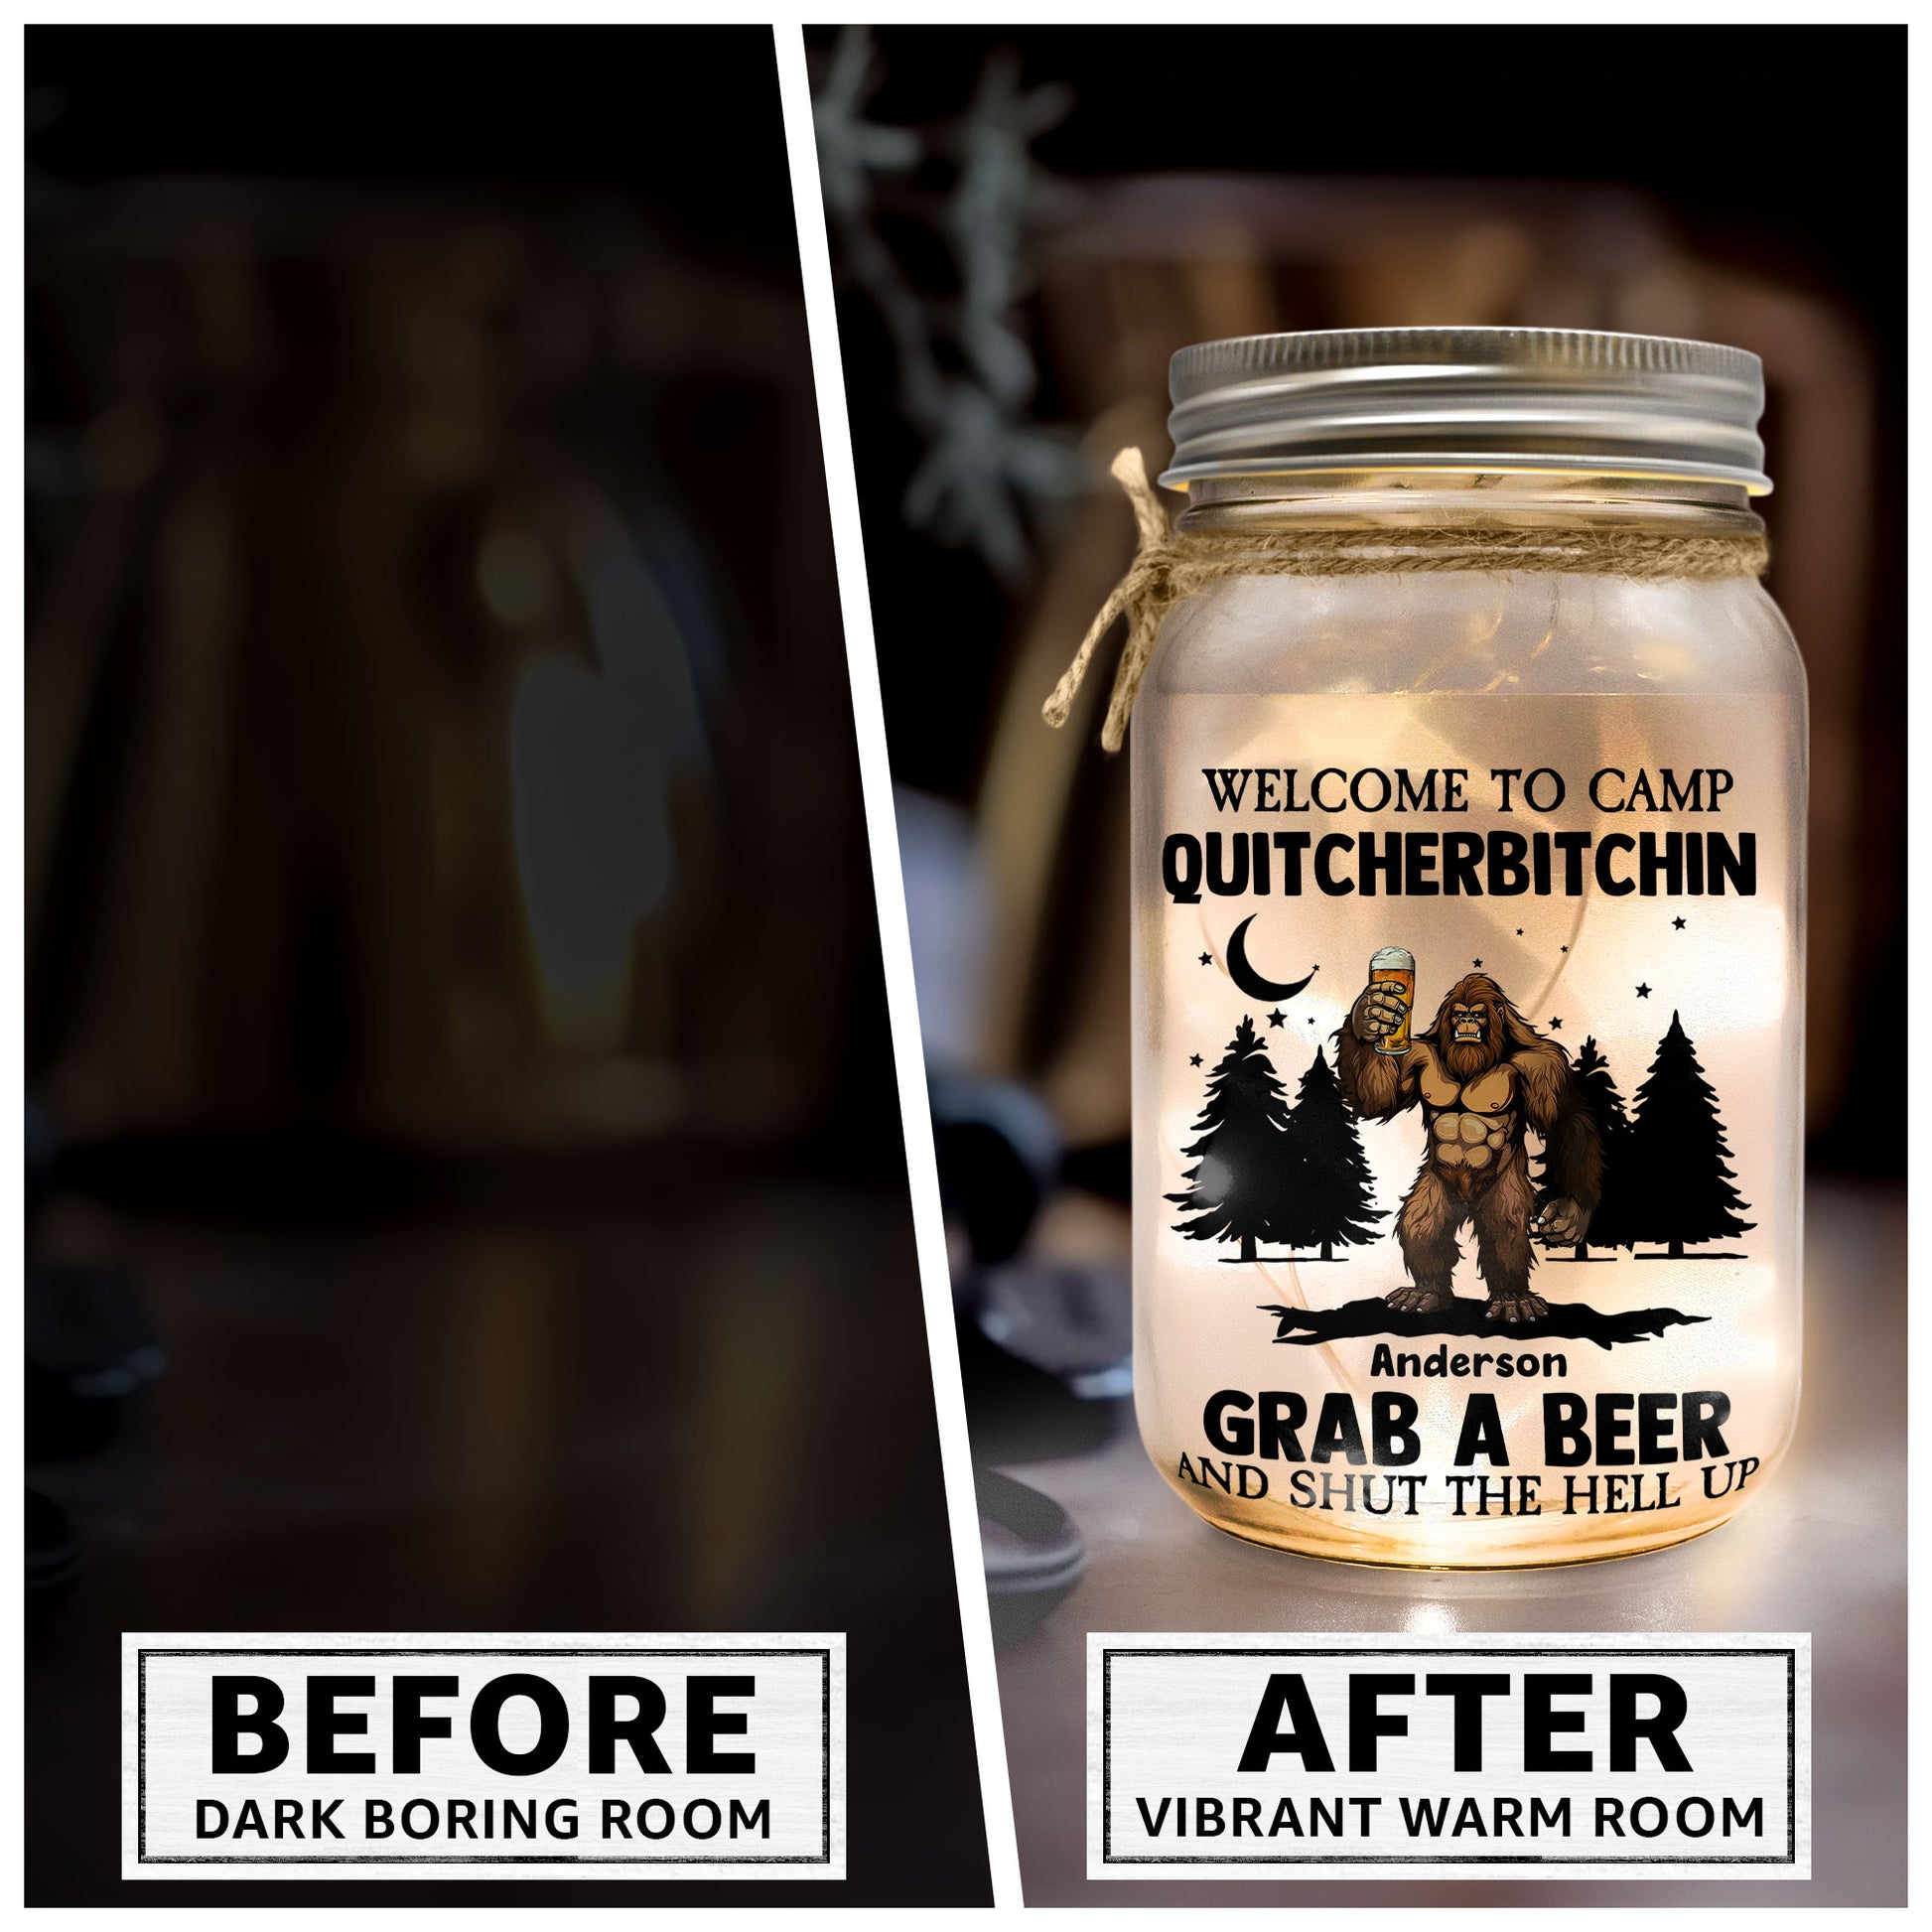 Bigfoot Welcome To Camp Quitcherbitchins Camping - Personalized Mason Jar Light